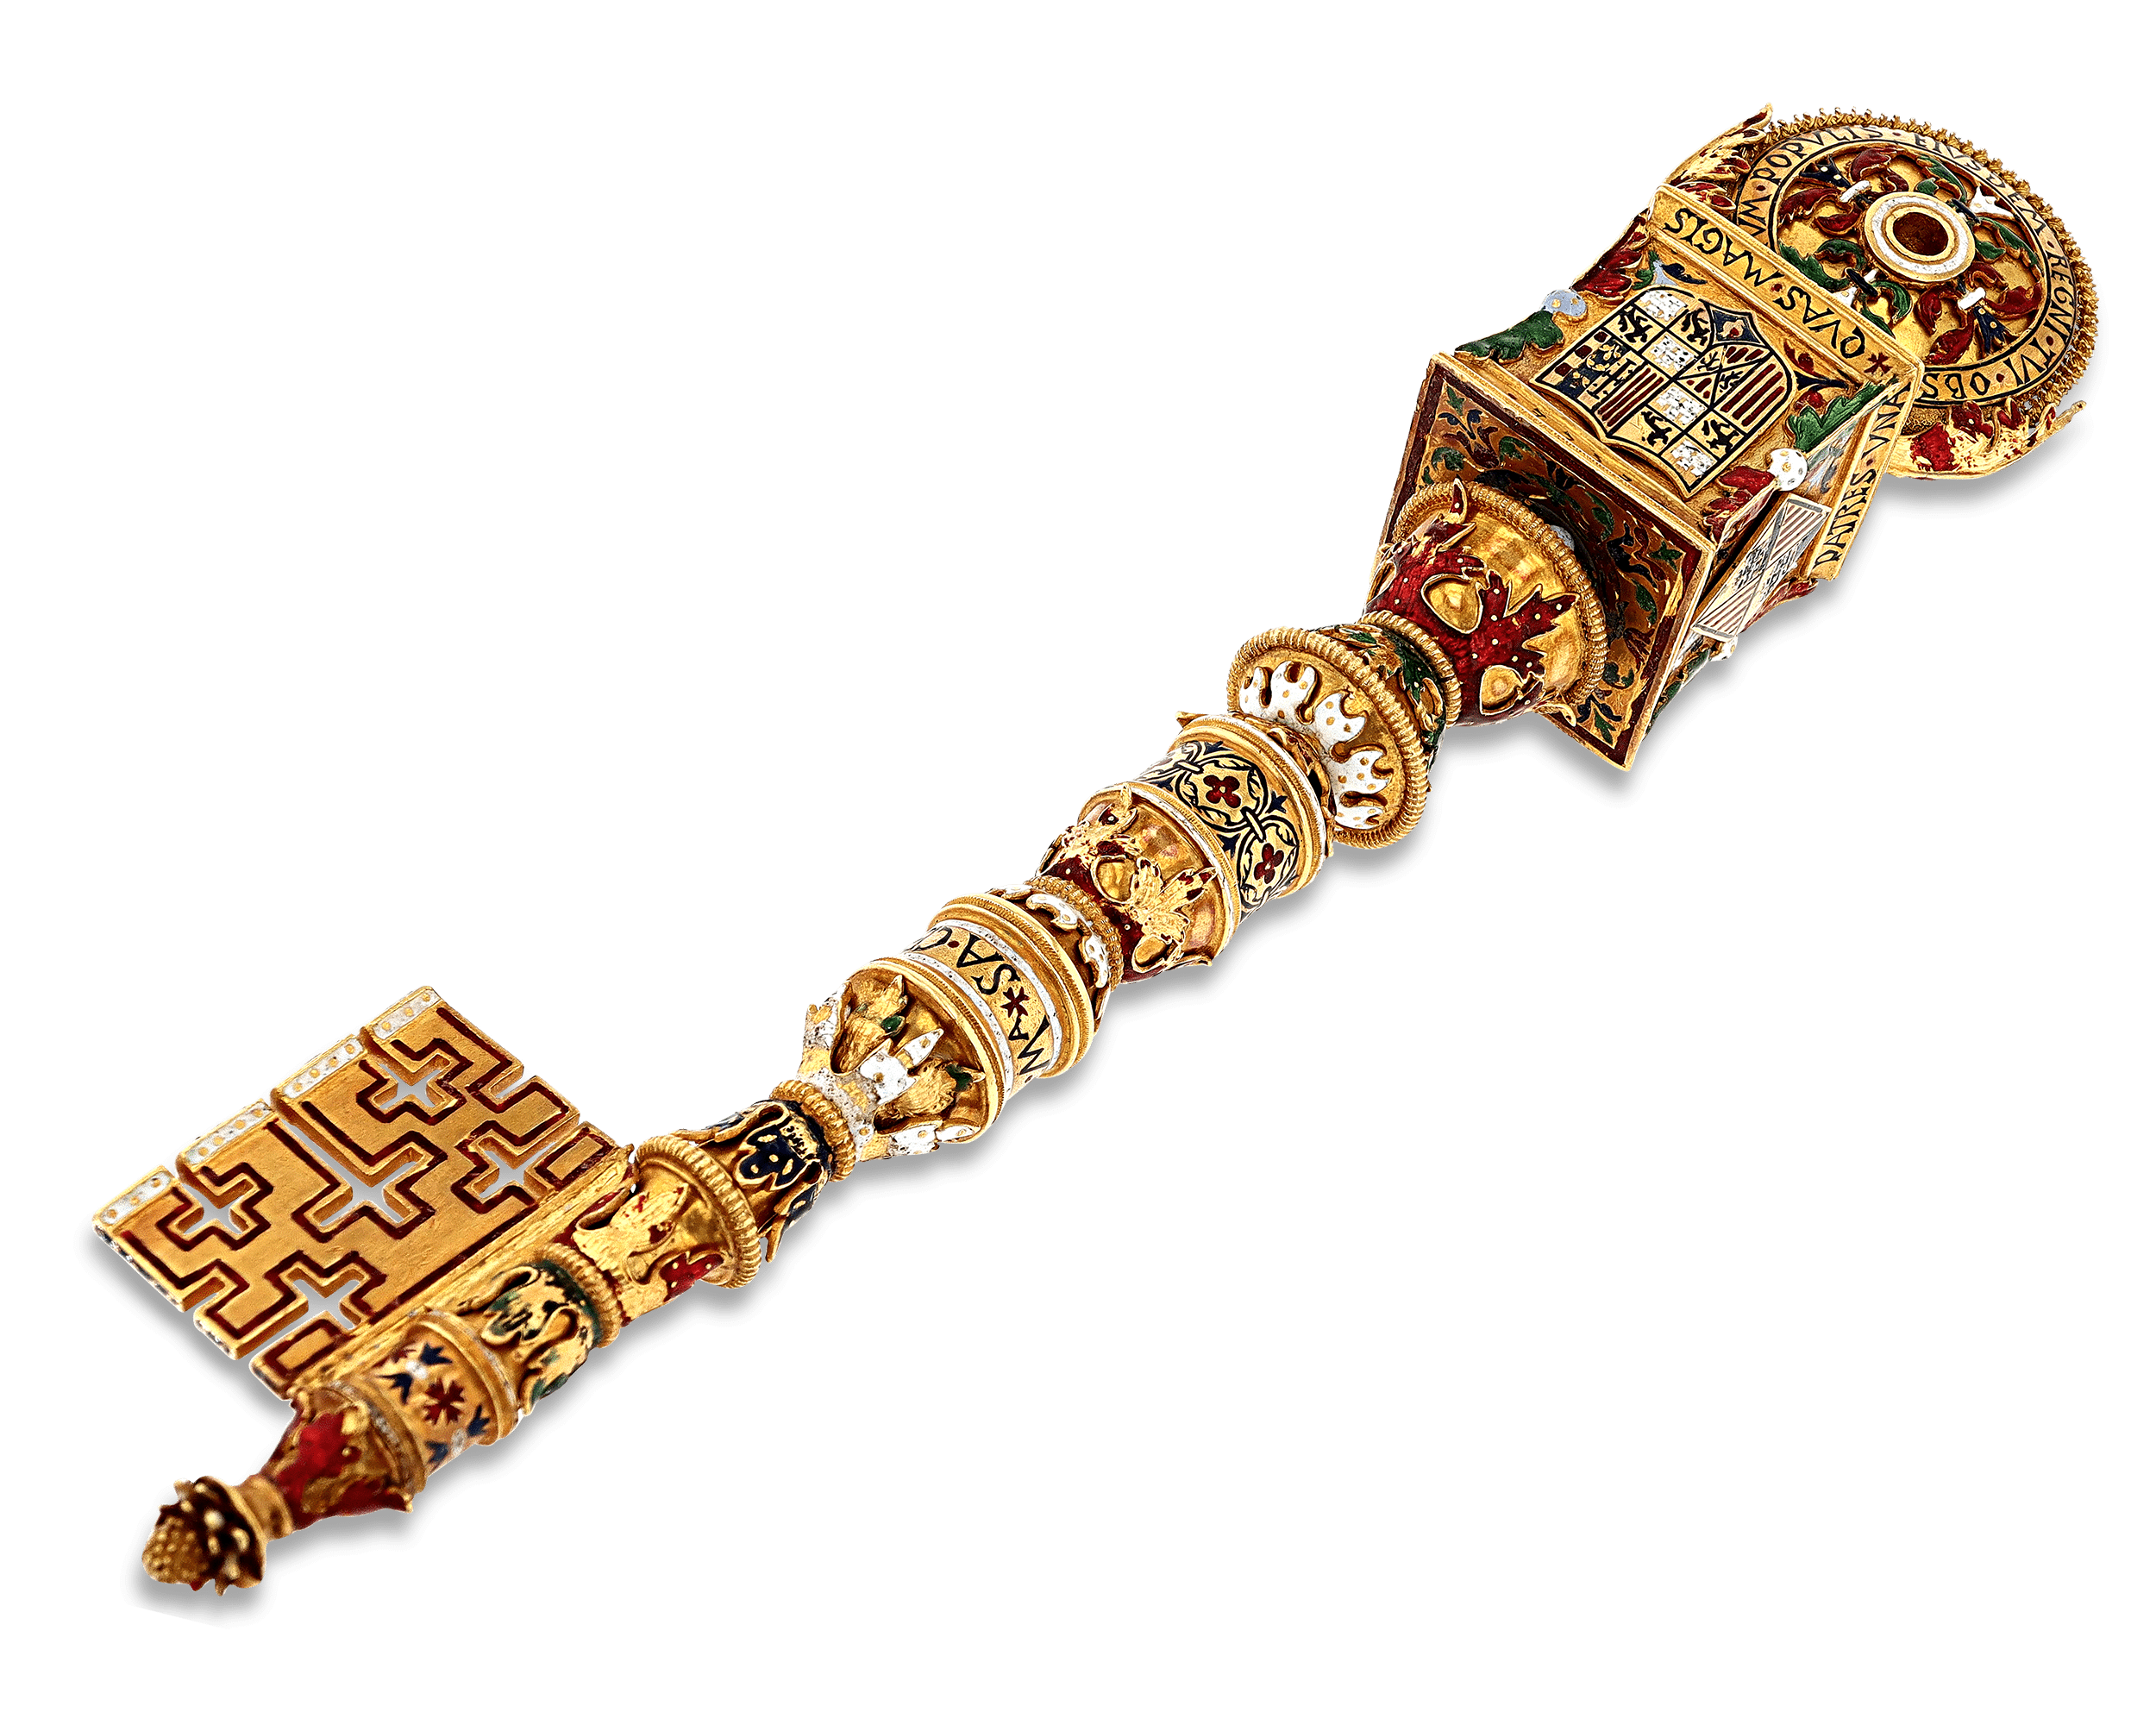 The Rothschild Renaissance Ceremonial Key